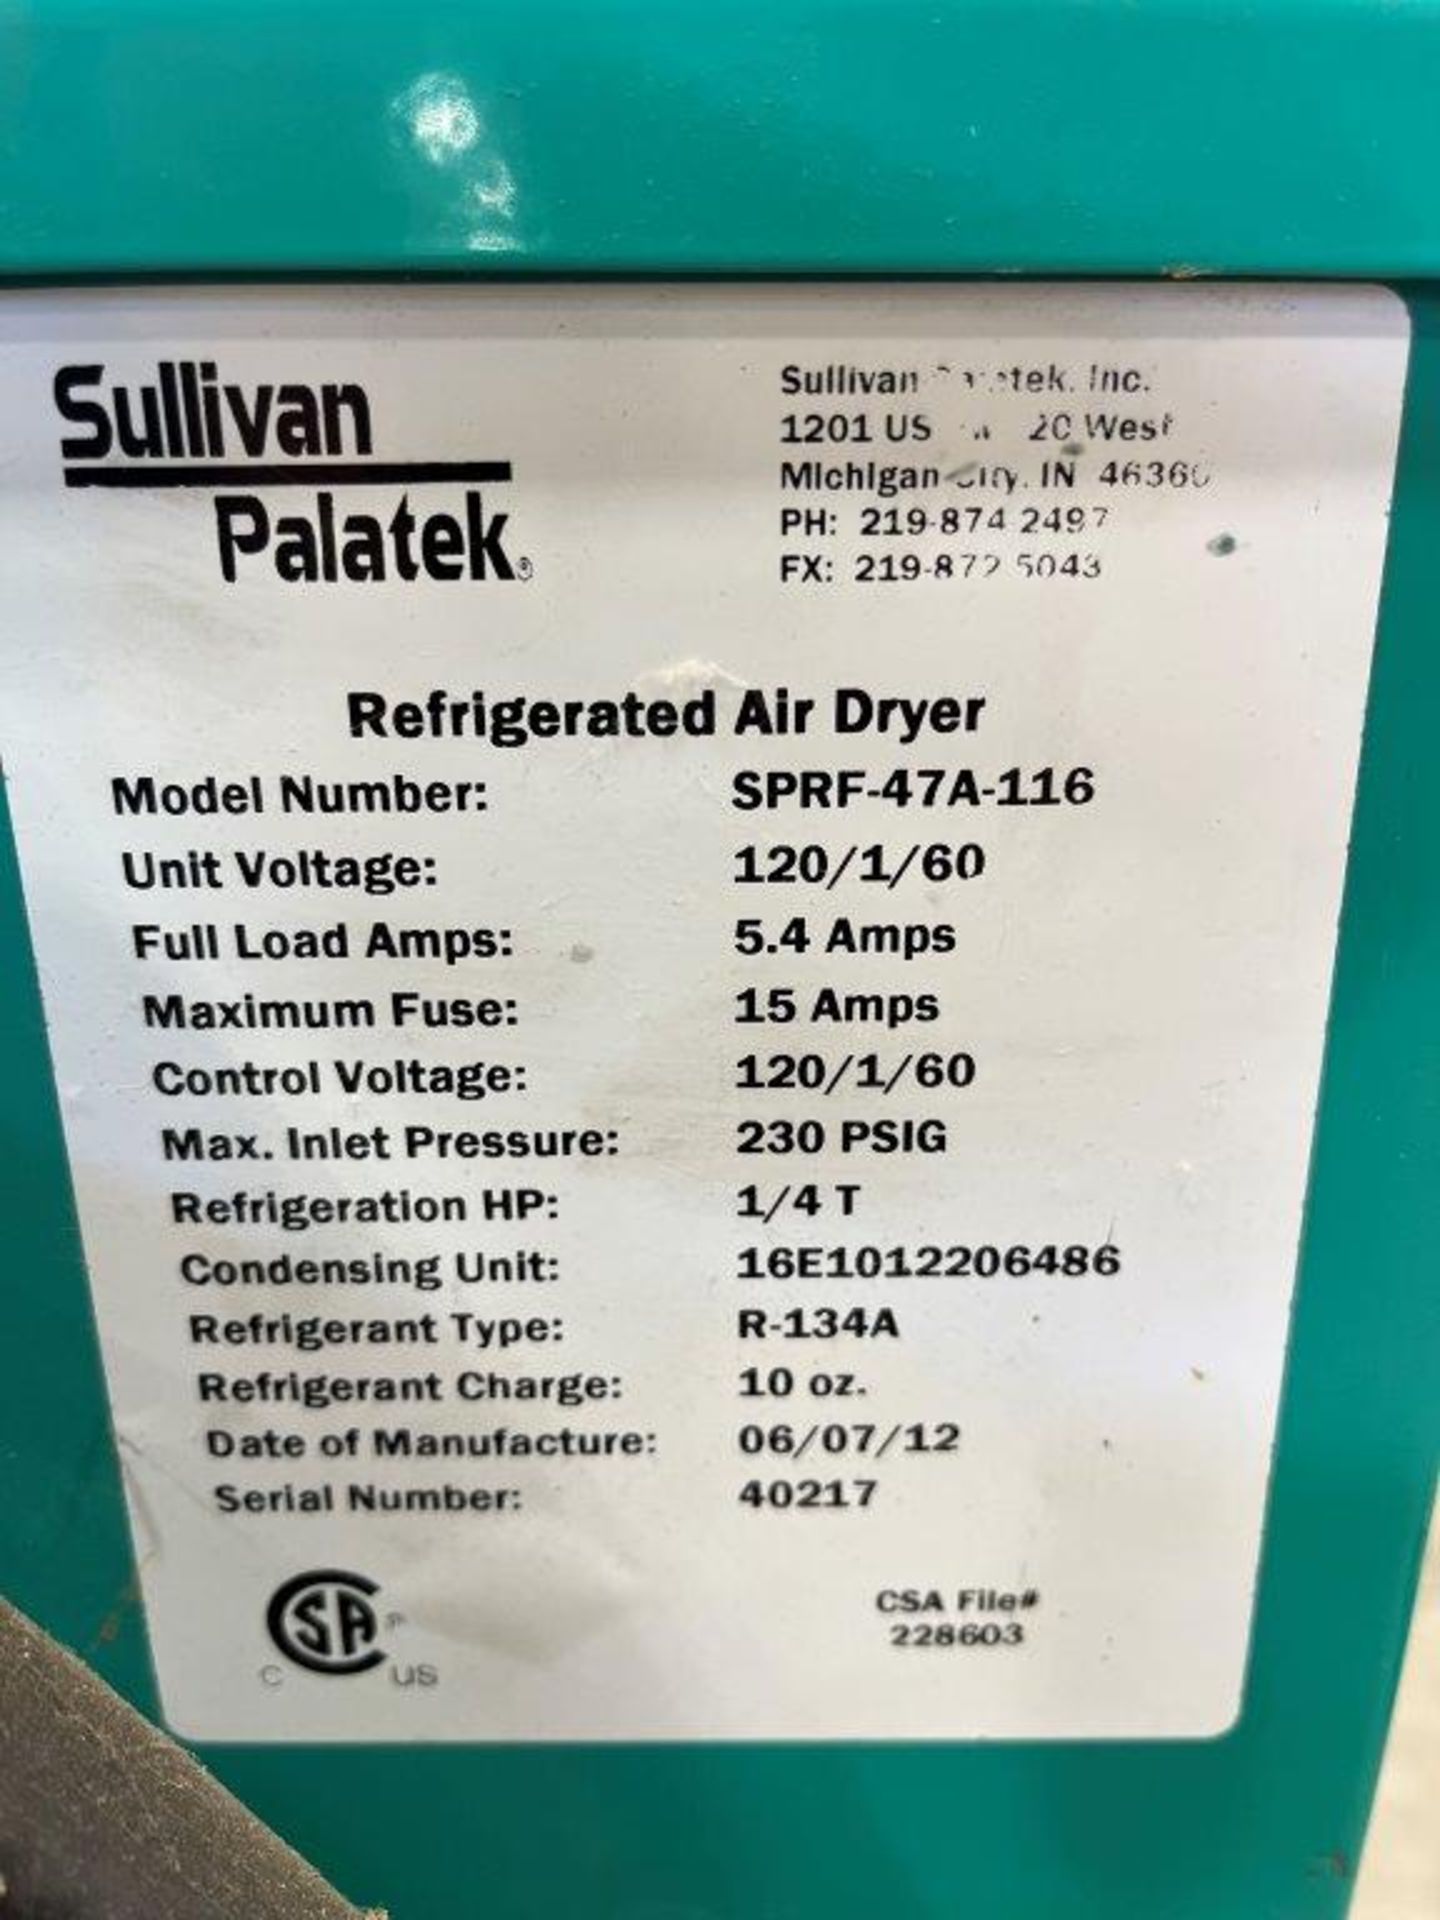 Sullivan Palatek SPRF-47A-116 Refrigerated Air Dryer - Image 2 of 2